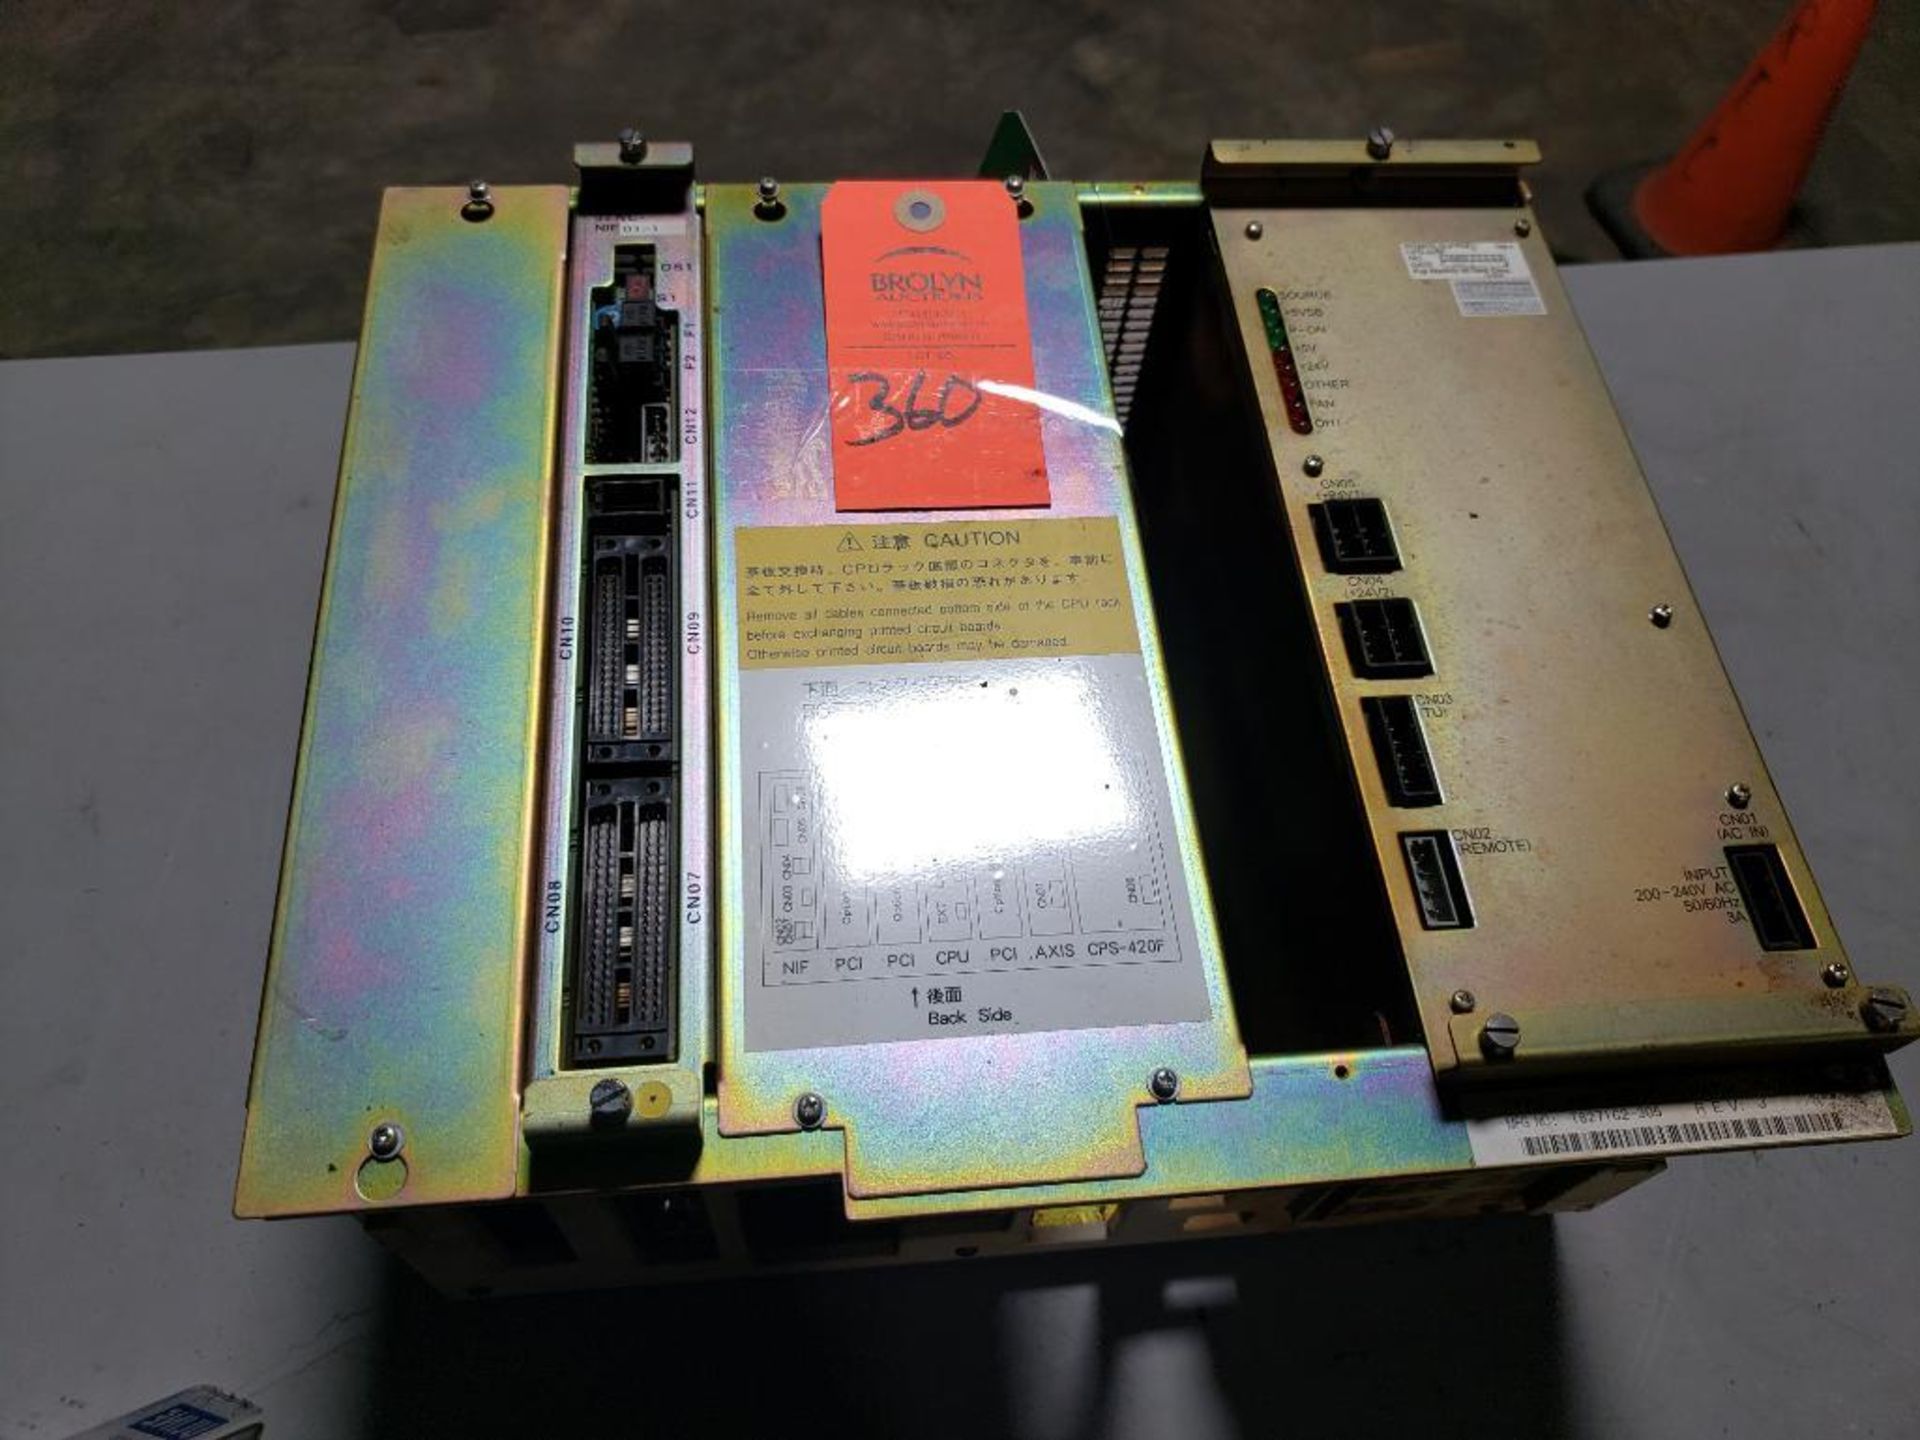 Yaskawa PLC rack. Includes JZNC-NIF01-1, JZNC-NRK01-1, and CPS-420F.